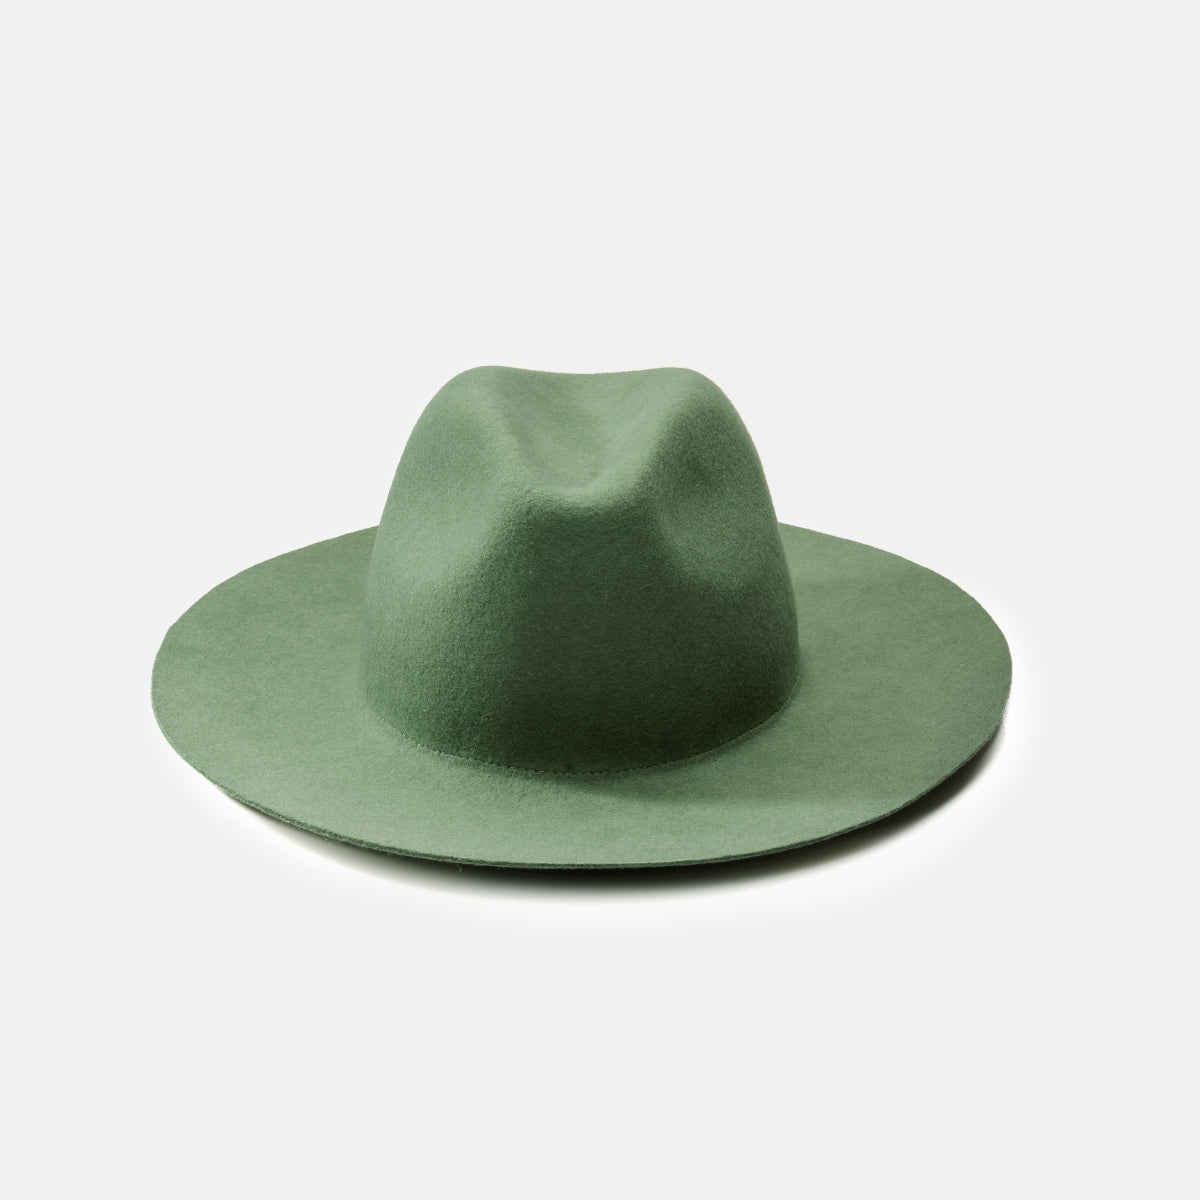 NTHIRTYTHREE PURE SAGE. PURE COLLECTION. Artisan-Made Fedora Felt Hat. Handmade in Italy. Handcrafted Headwear. Chapeaux. Felt Hat. Handgefertigt. Fedora Hut. Unisex Men's hats. Women's hats. N33. Luxury Fedora Hat. 